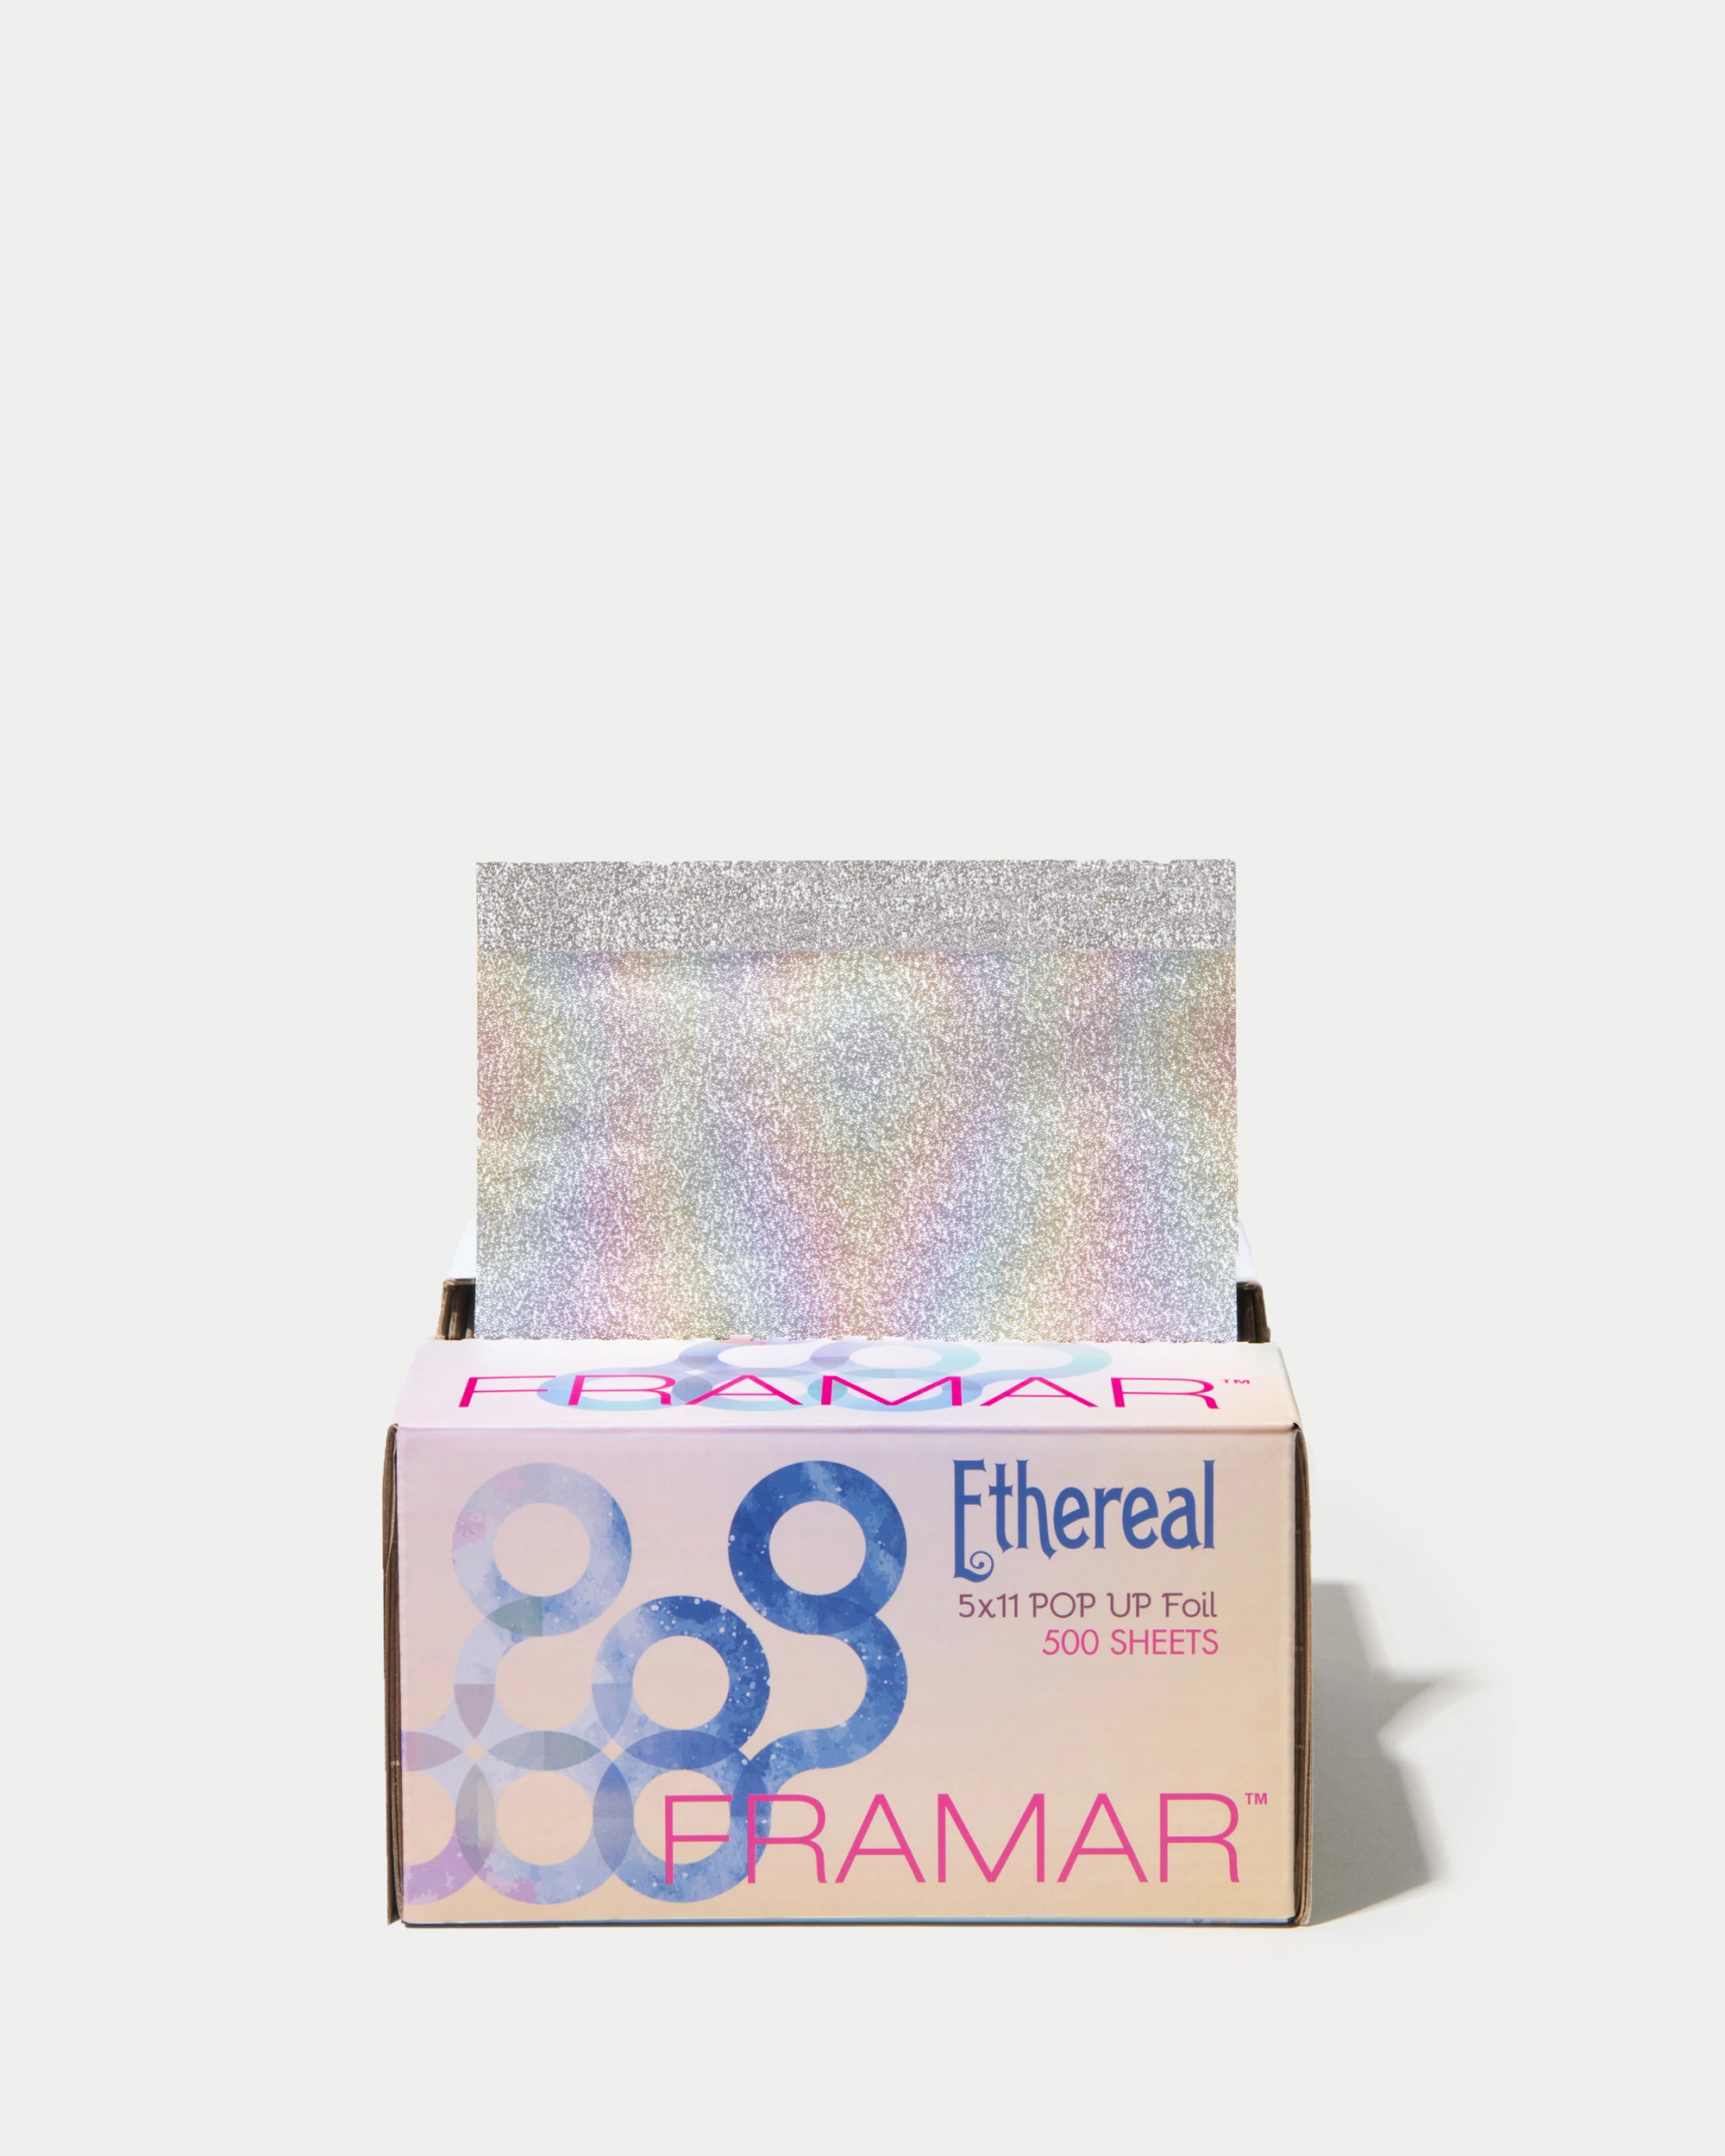 Framar 5x11 Pop Ups Ethereal - 500 Sheets